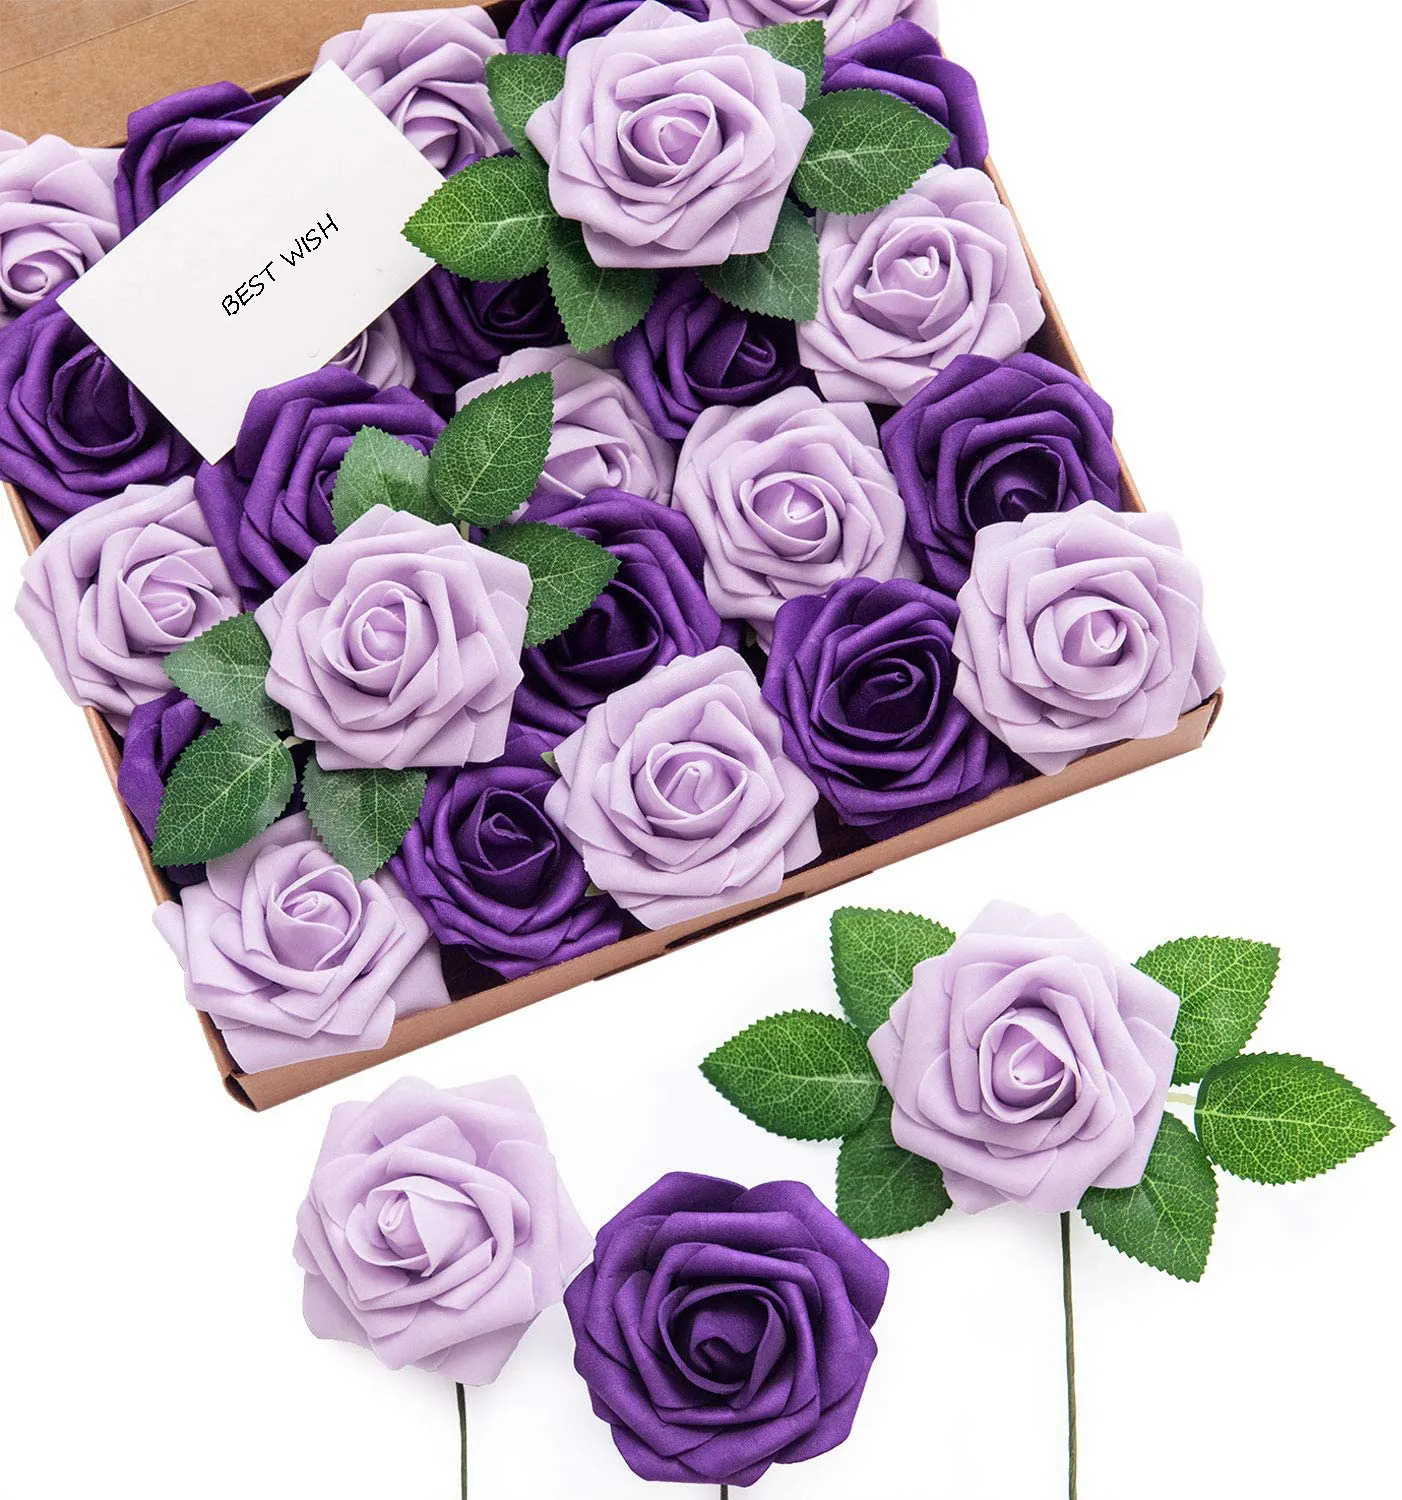 DIY 웨딩 부케 파티 홈 장식을위한 인공 장미 꽃 상자 세트 25PCS 라일락 & 퍼플 현실적인 인공 장미